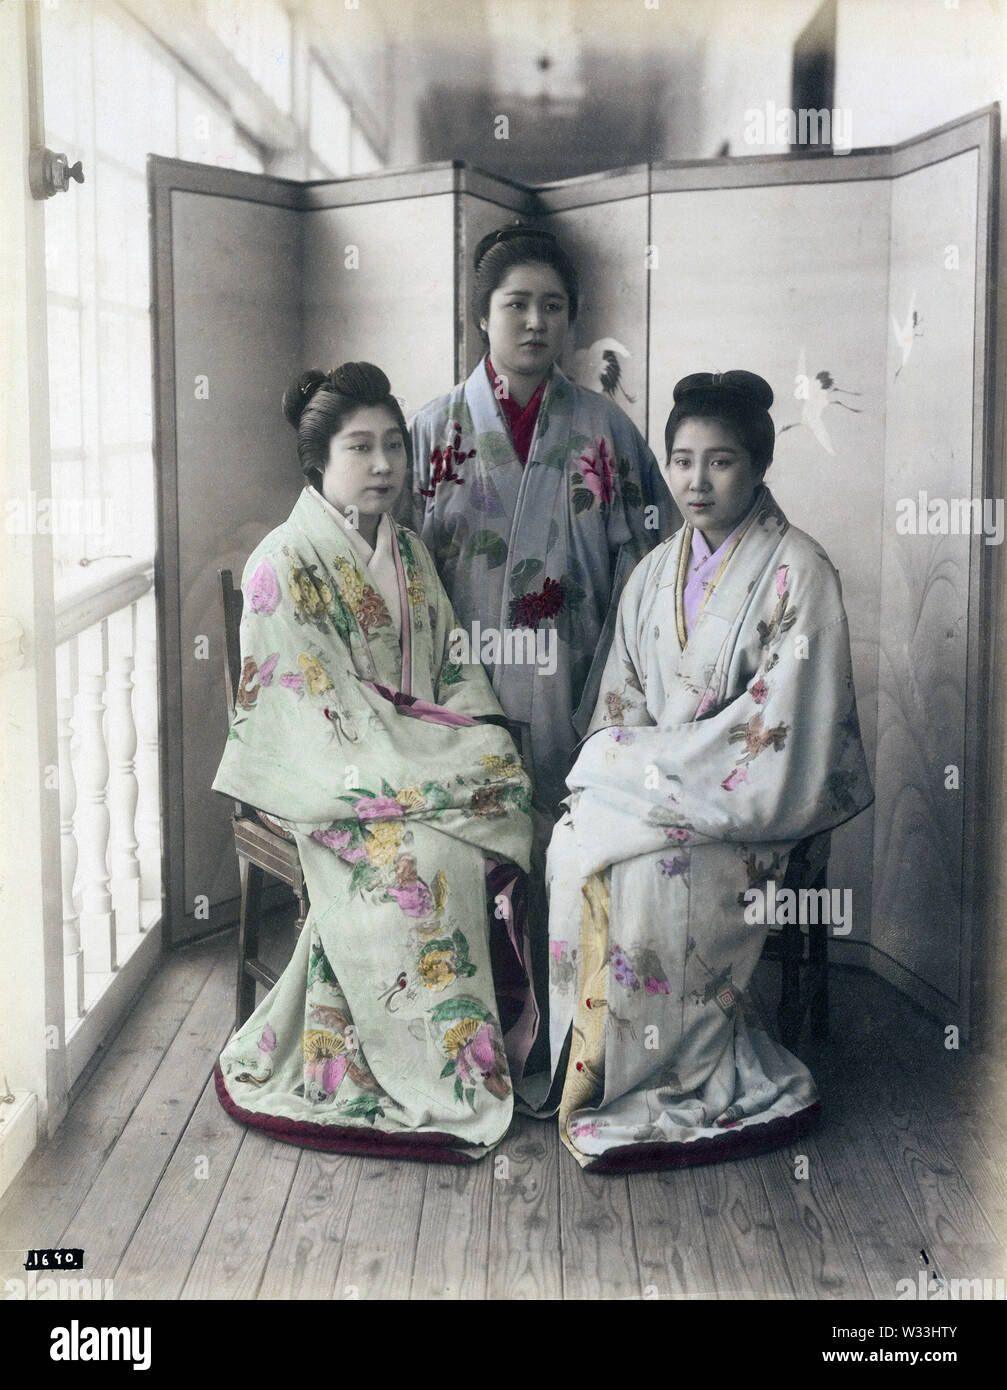 1890s Japan - Japanese Prostitutes ] — Japanese prostitutes in kimono and  traditional hairstyles. 19th century vintage albumen photograph Stock Photo  - Alamy